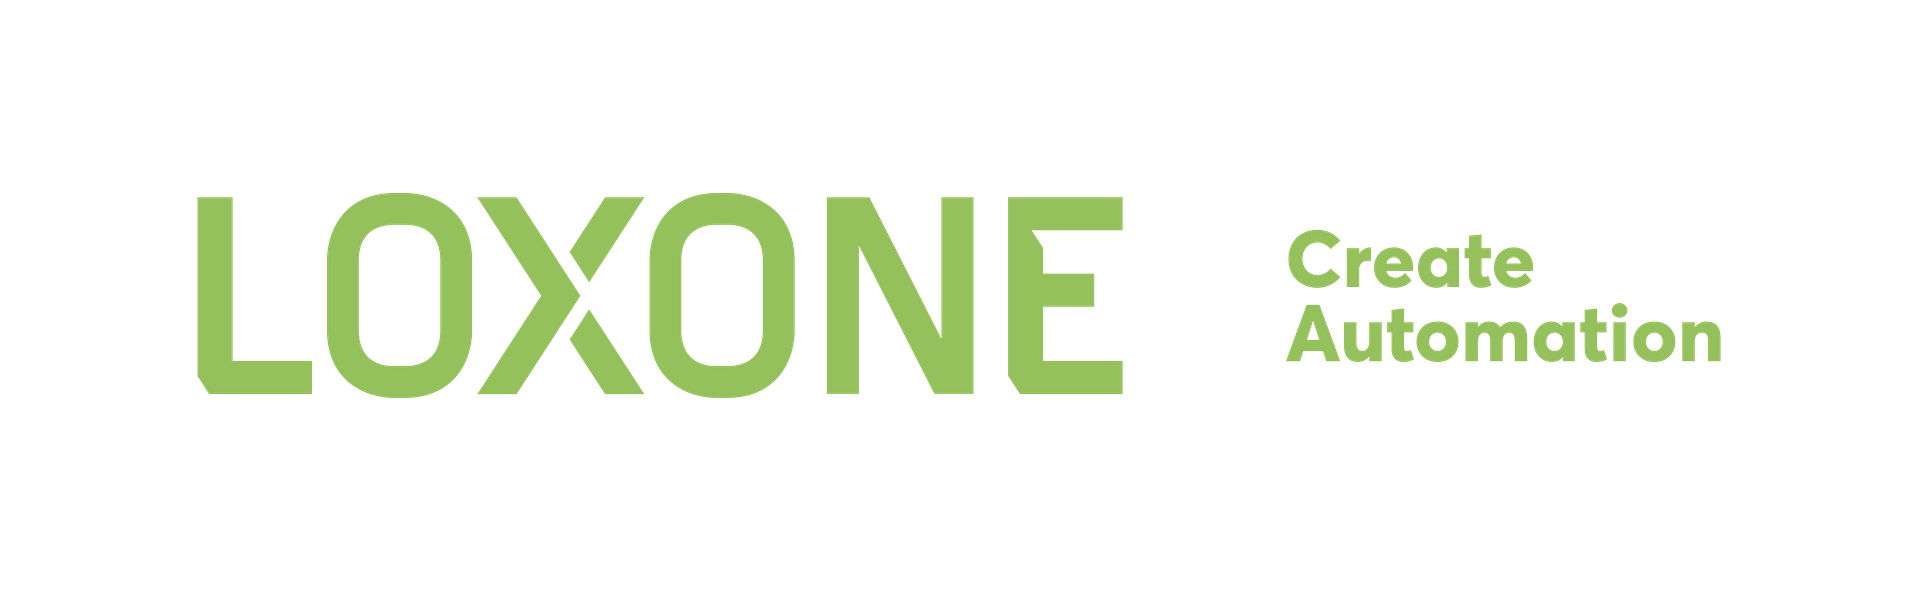 Logo Loxone Create Automation Web